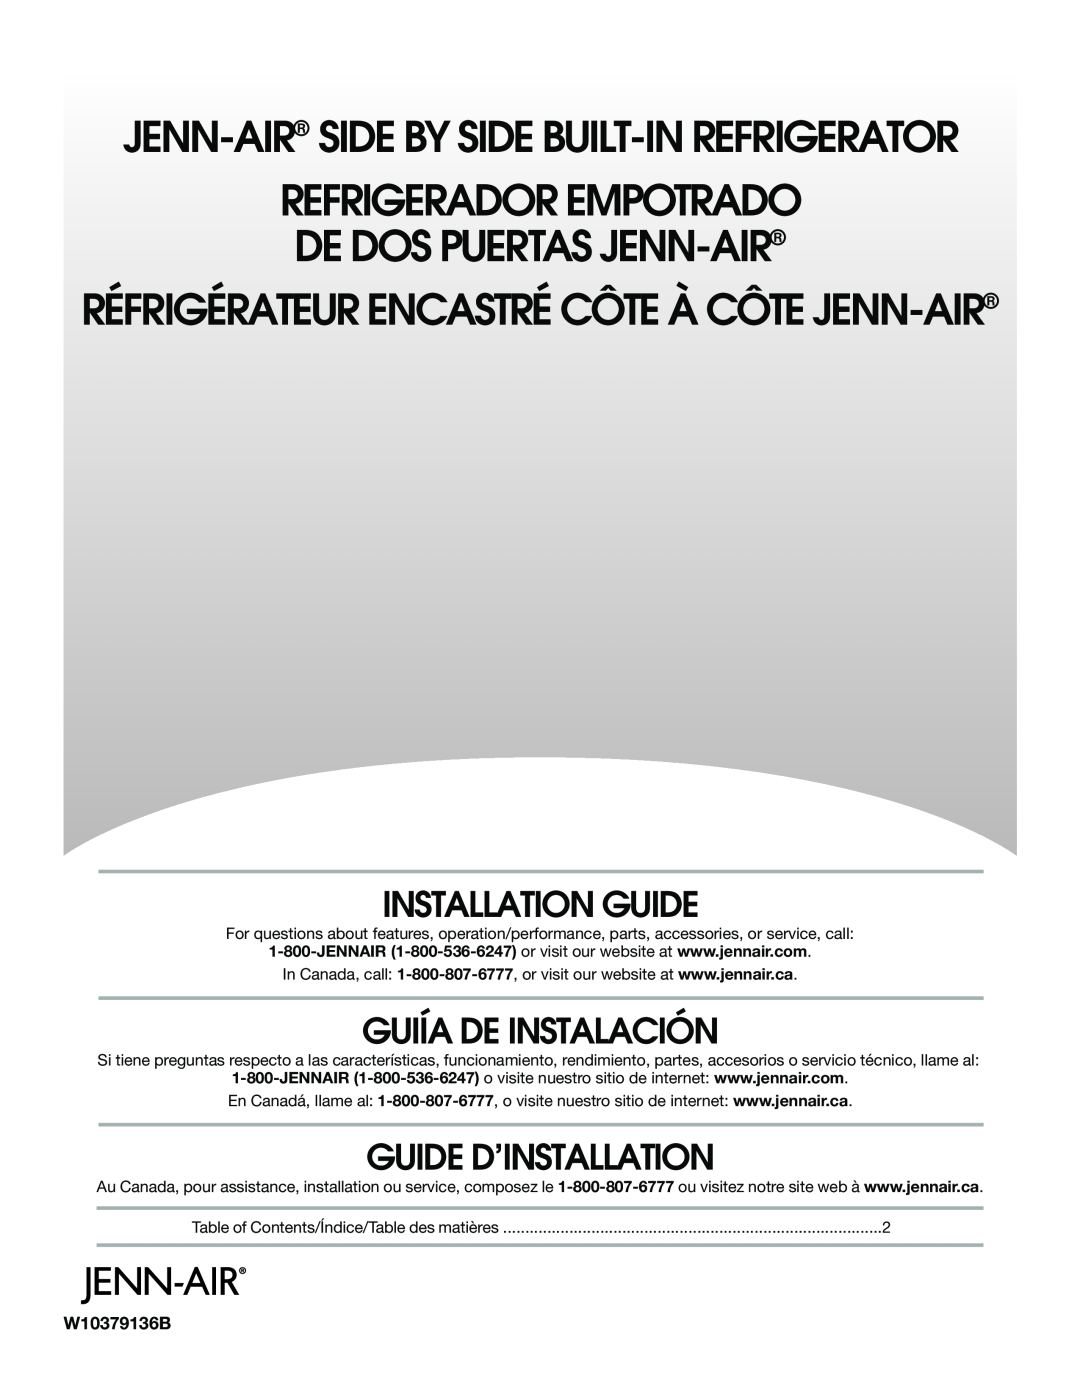 Jenn-Air W10379136B manual Installation Guide, Guiía De Instalación, Guide D’Installation 